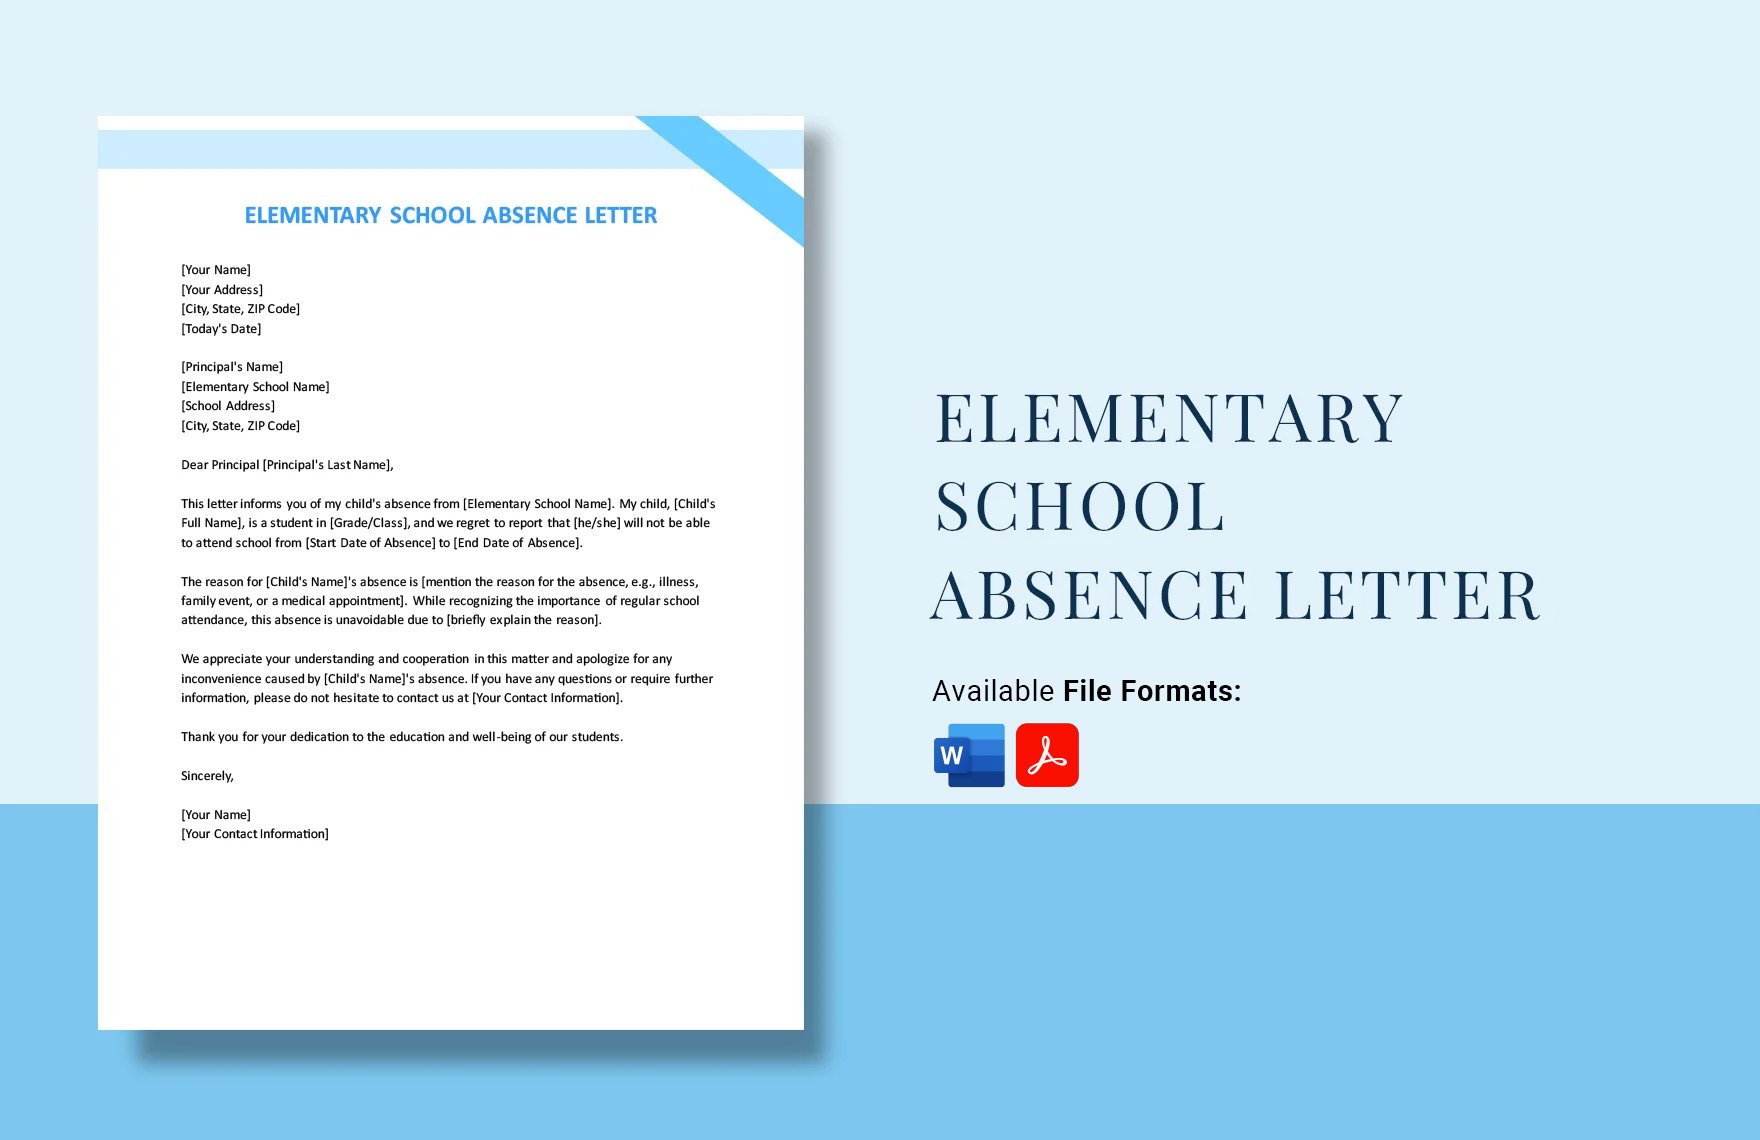 Elementary School Absence Letter in Word, PDF